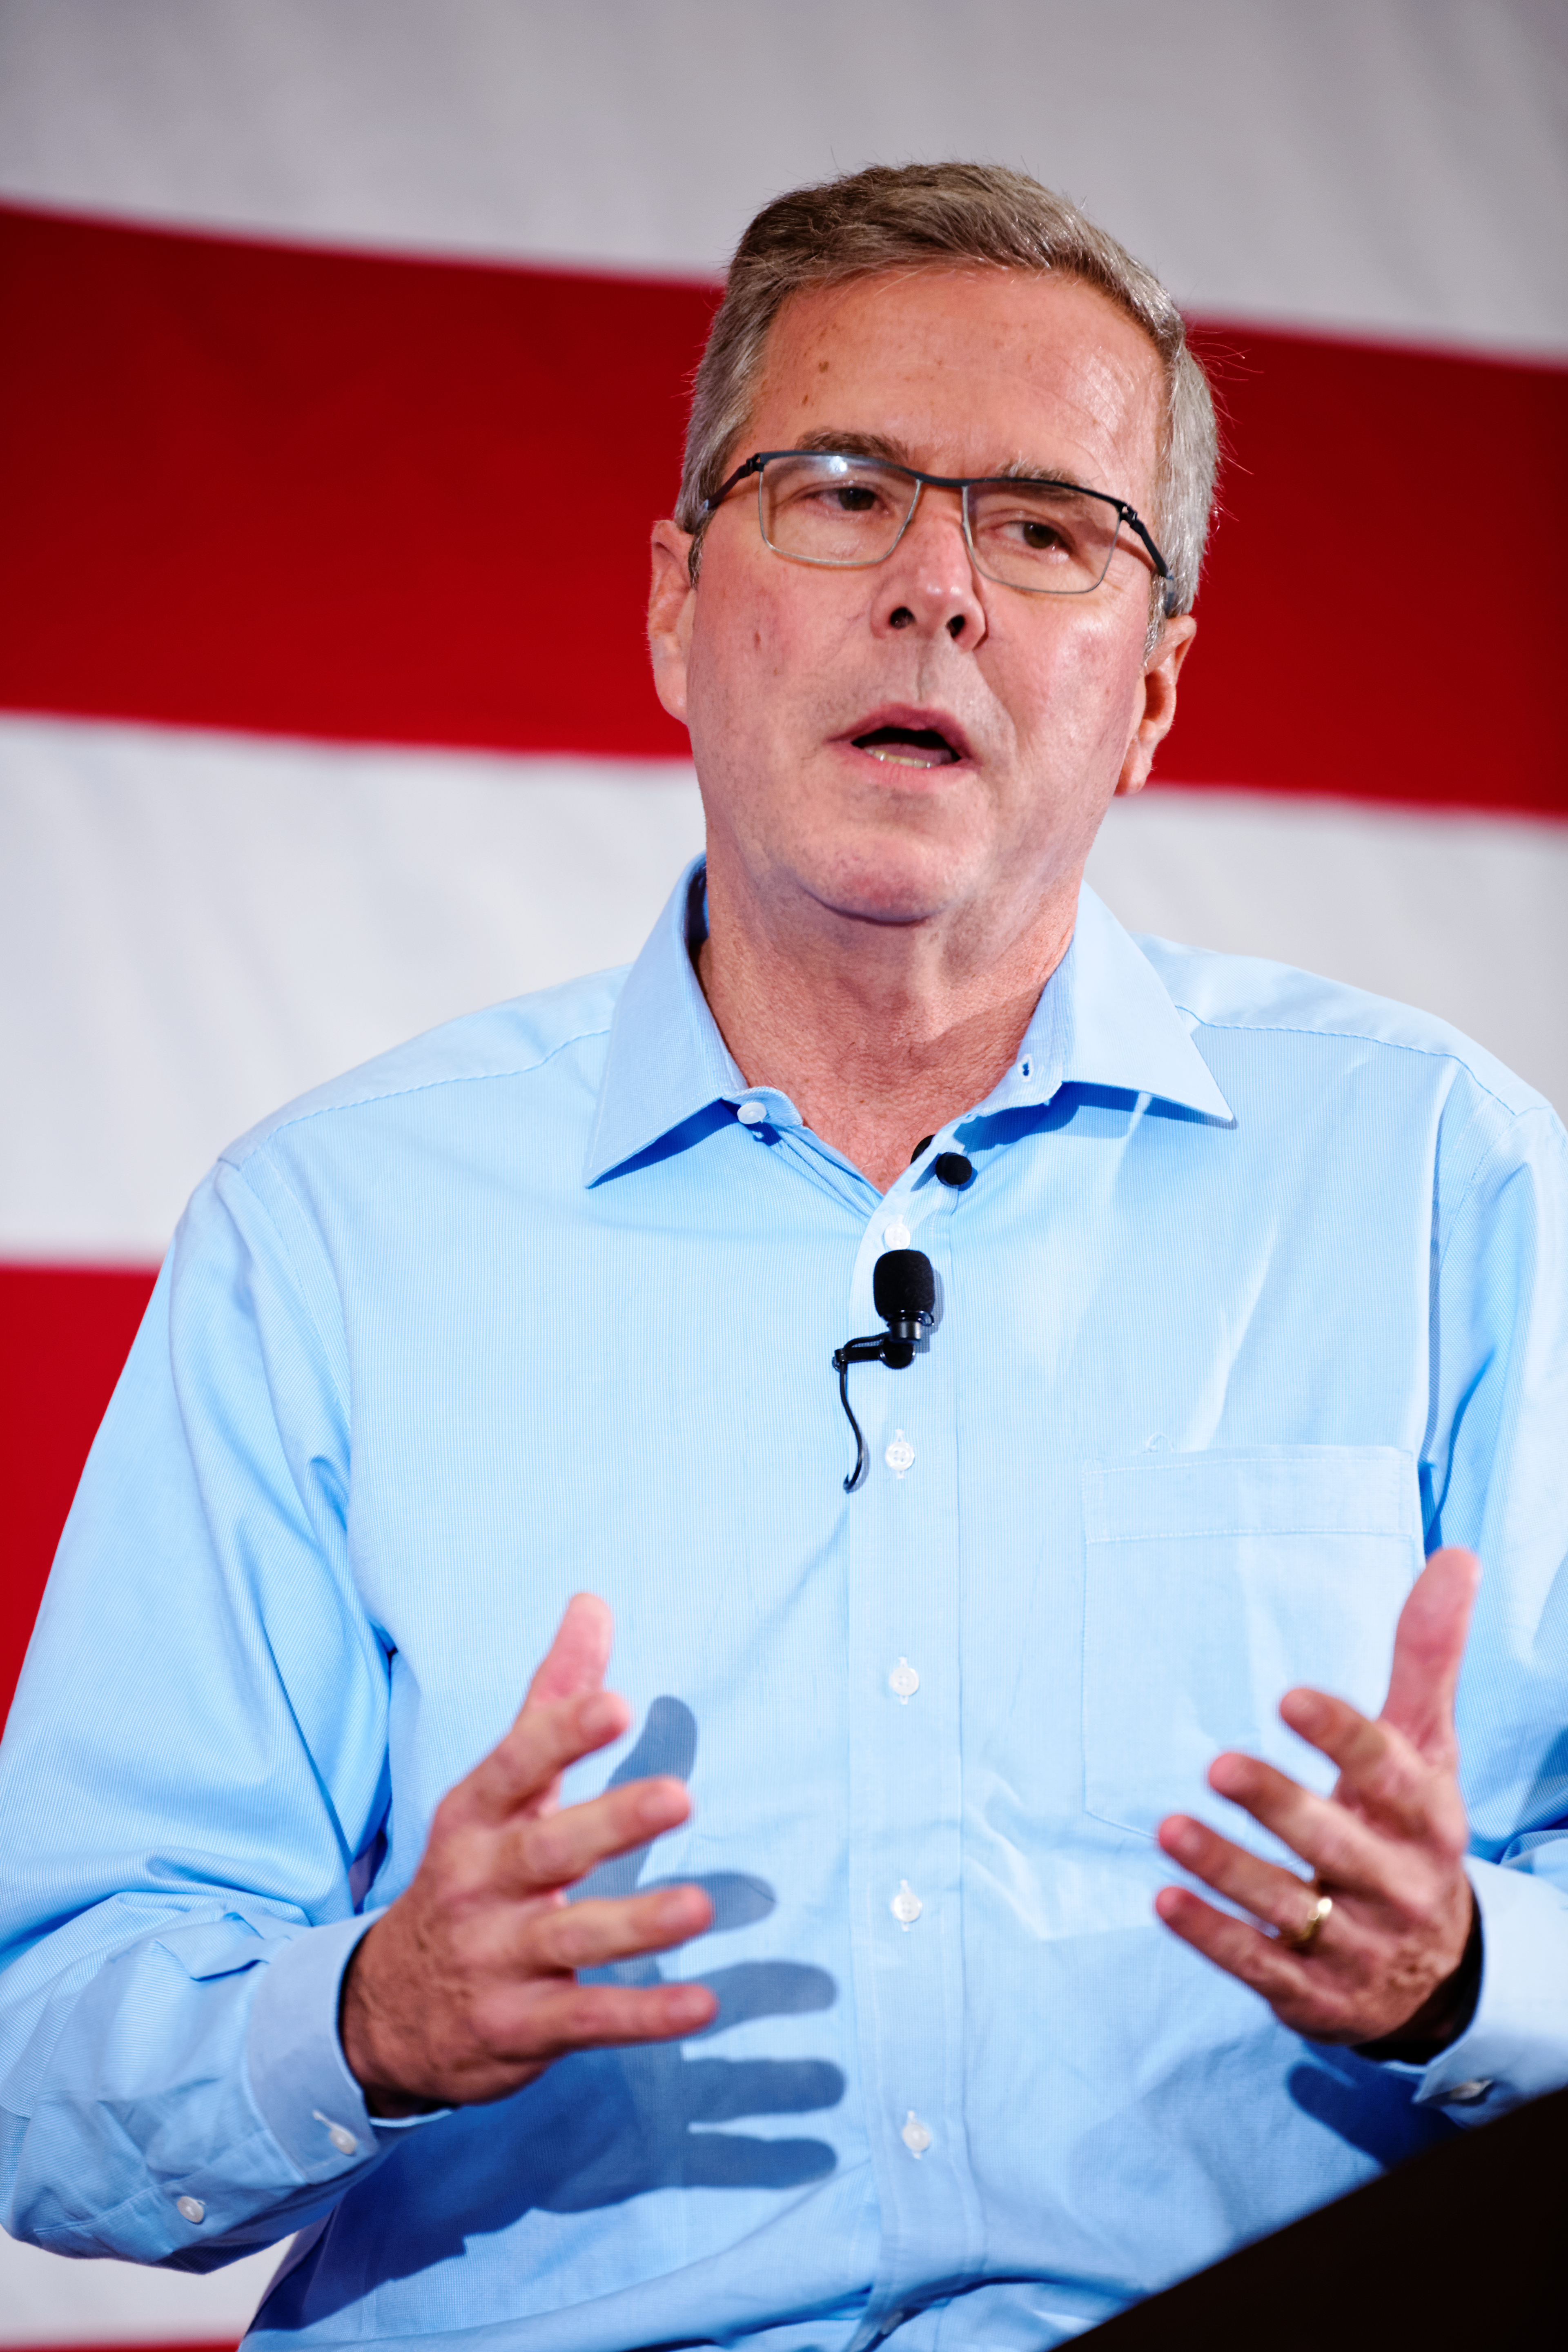 Jeb Bush speaking at a Republican event